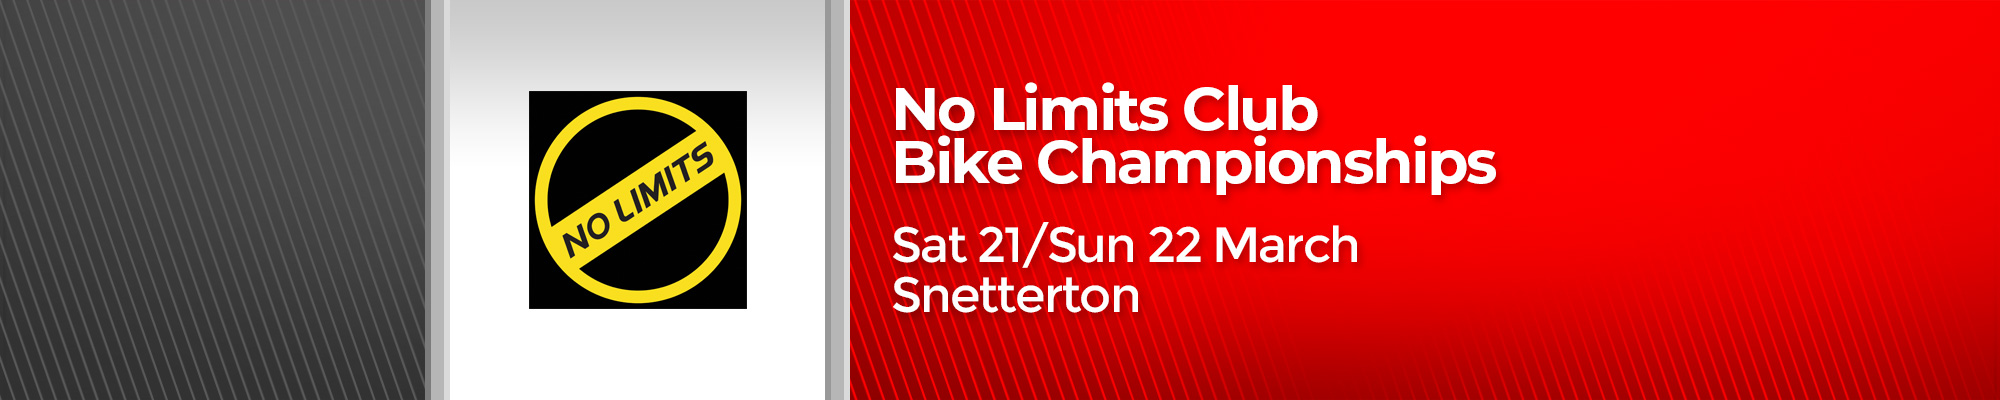  No Limits Racing Club Bike Championships - POSTPONED